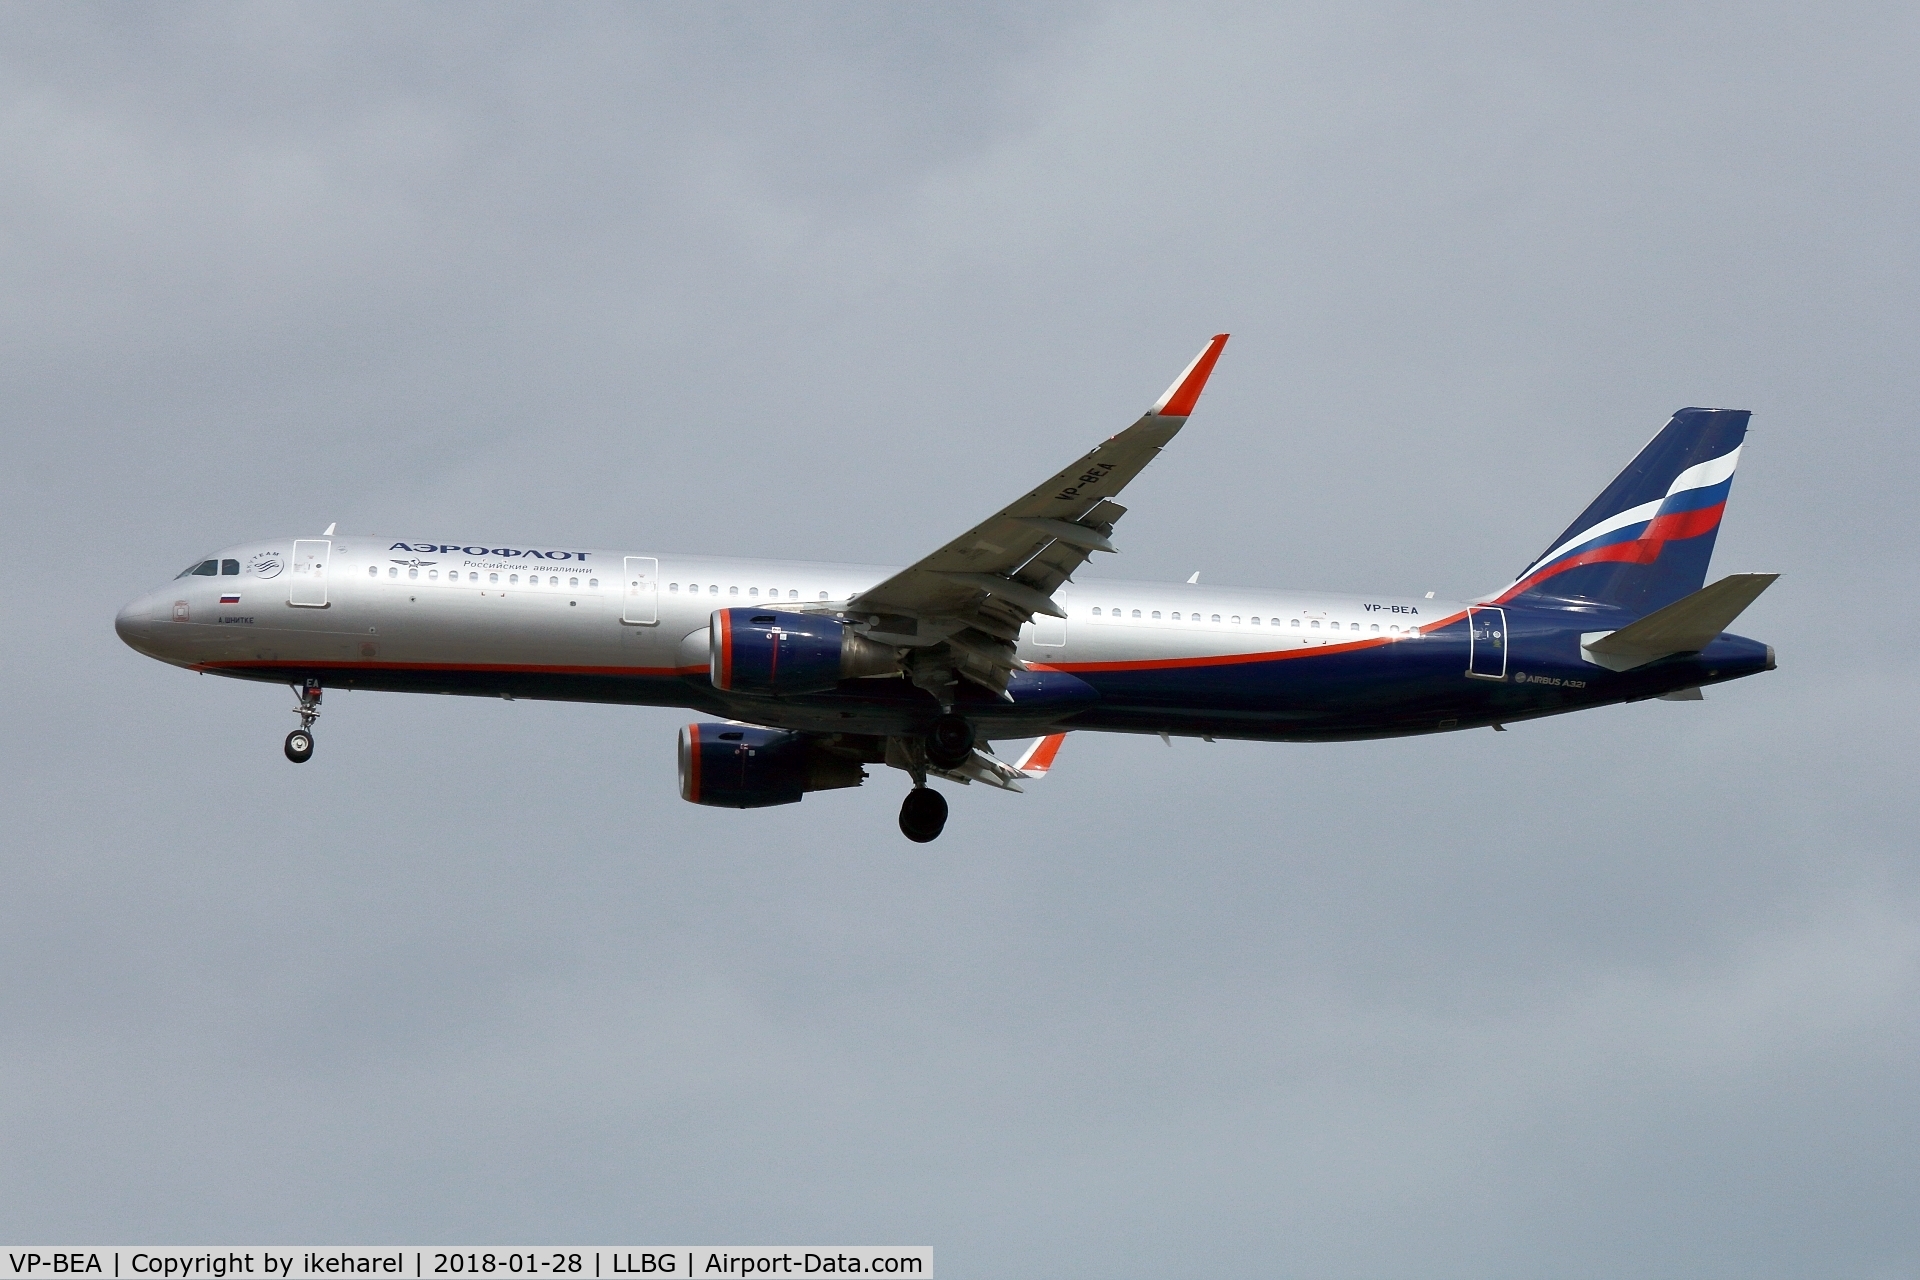 VP-BEA, 2015 Airbus A321-211 C/N 6678, Aeroflot flight from Moscow landing on runway 26.